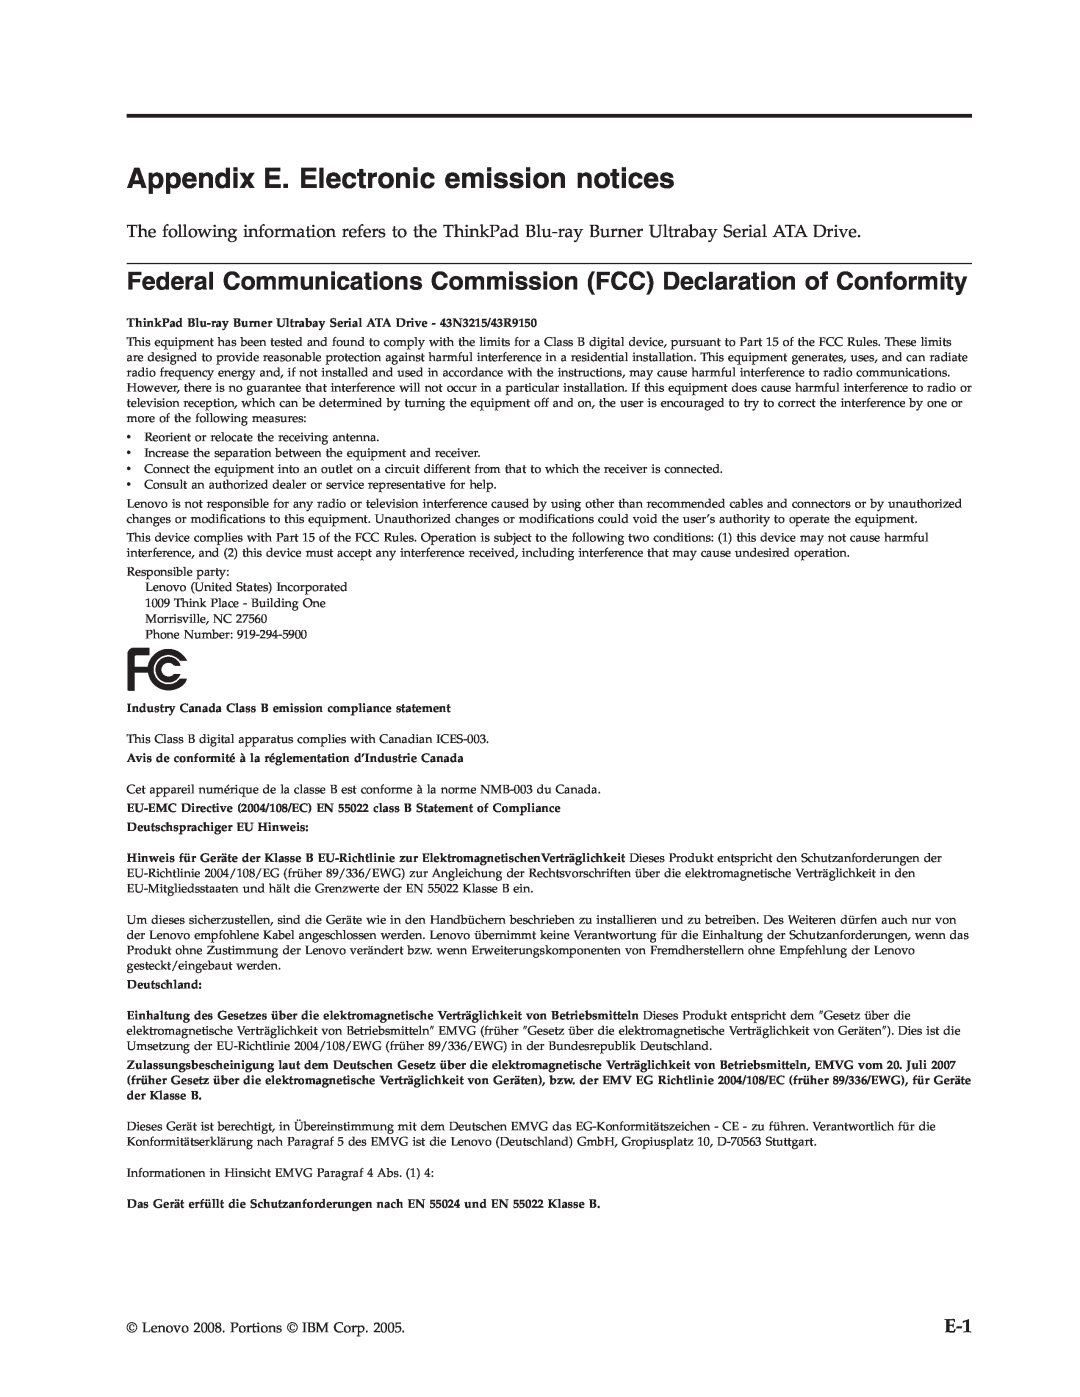 Lenovo 43N3224 manual Appendix E. Electronic emission notices, Deutschsprachiger EU Hinweis, Deutschland 